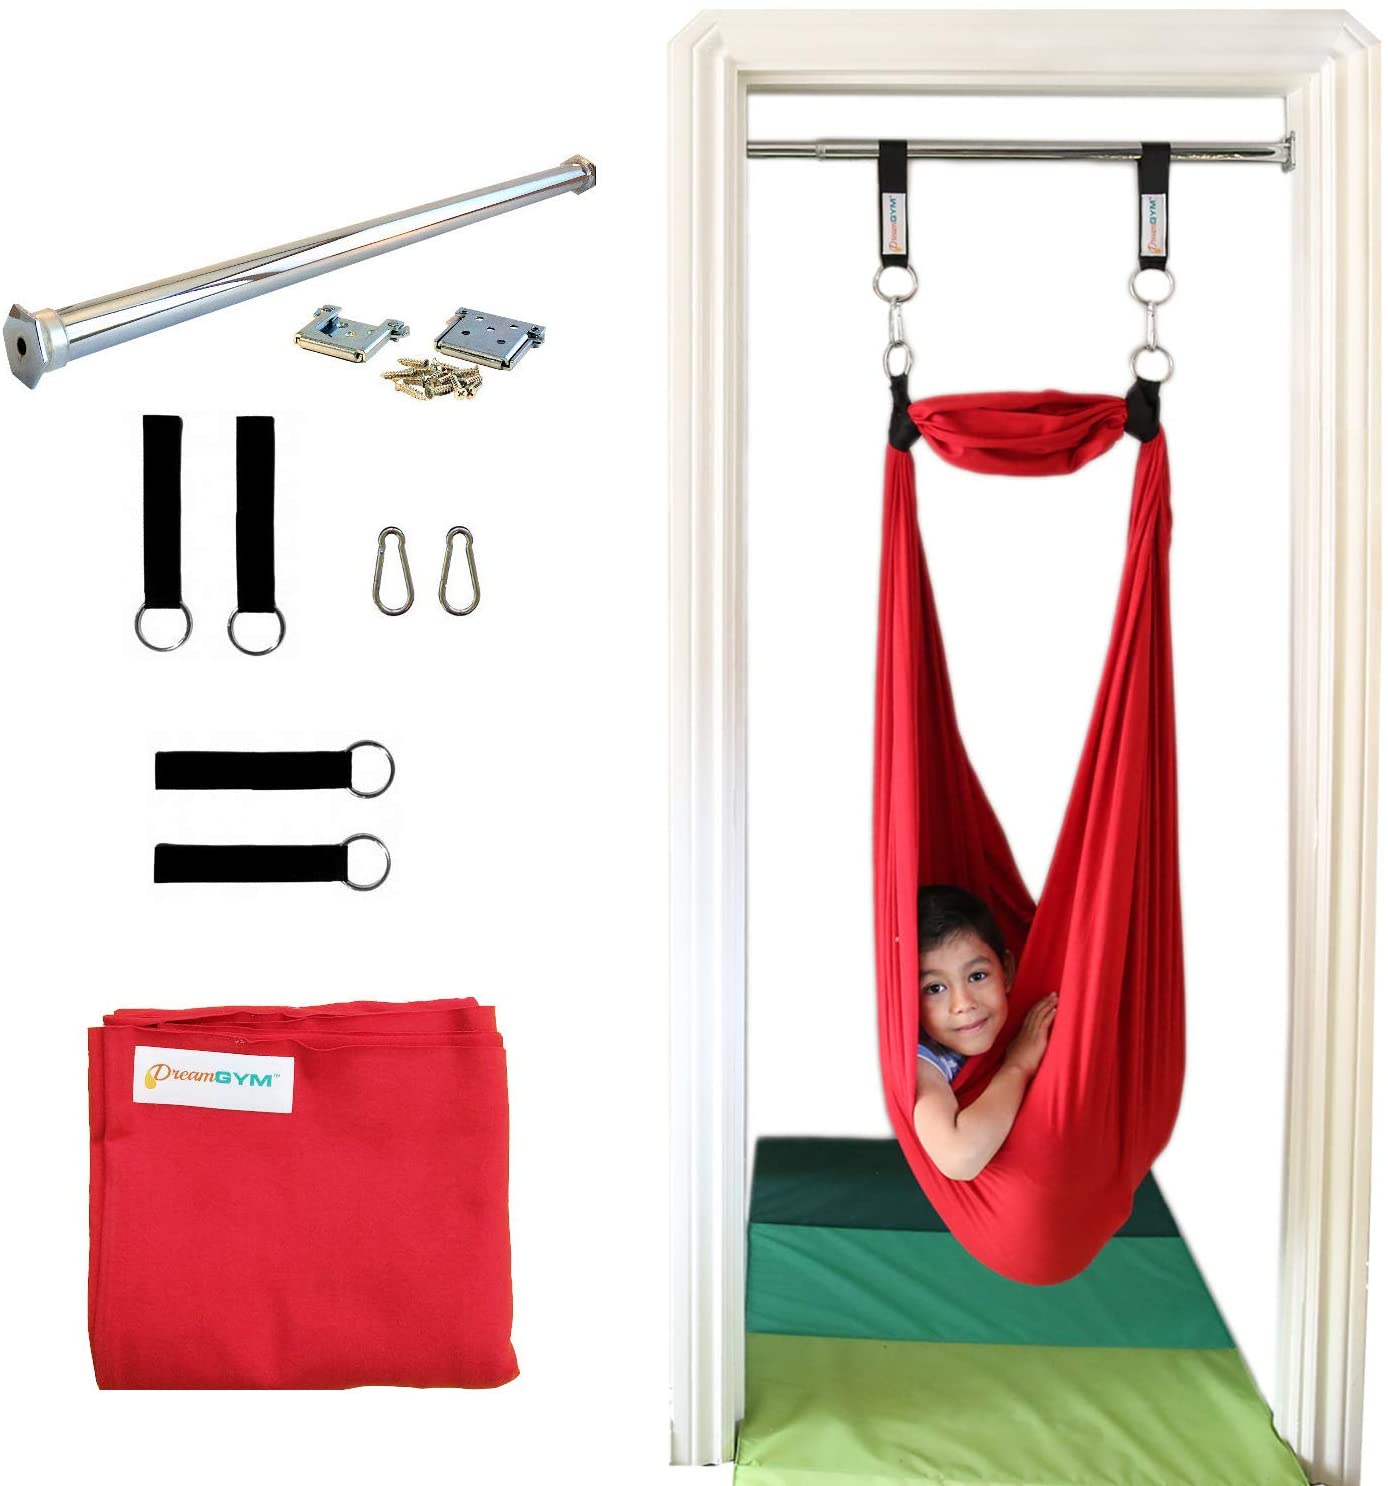 Gifts for Kids - Doorway Sensory Swing - Savvy Mom